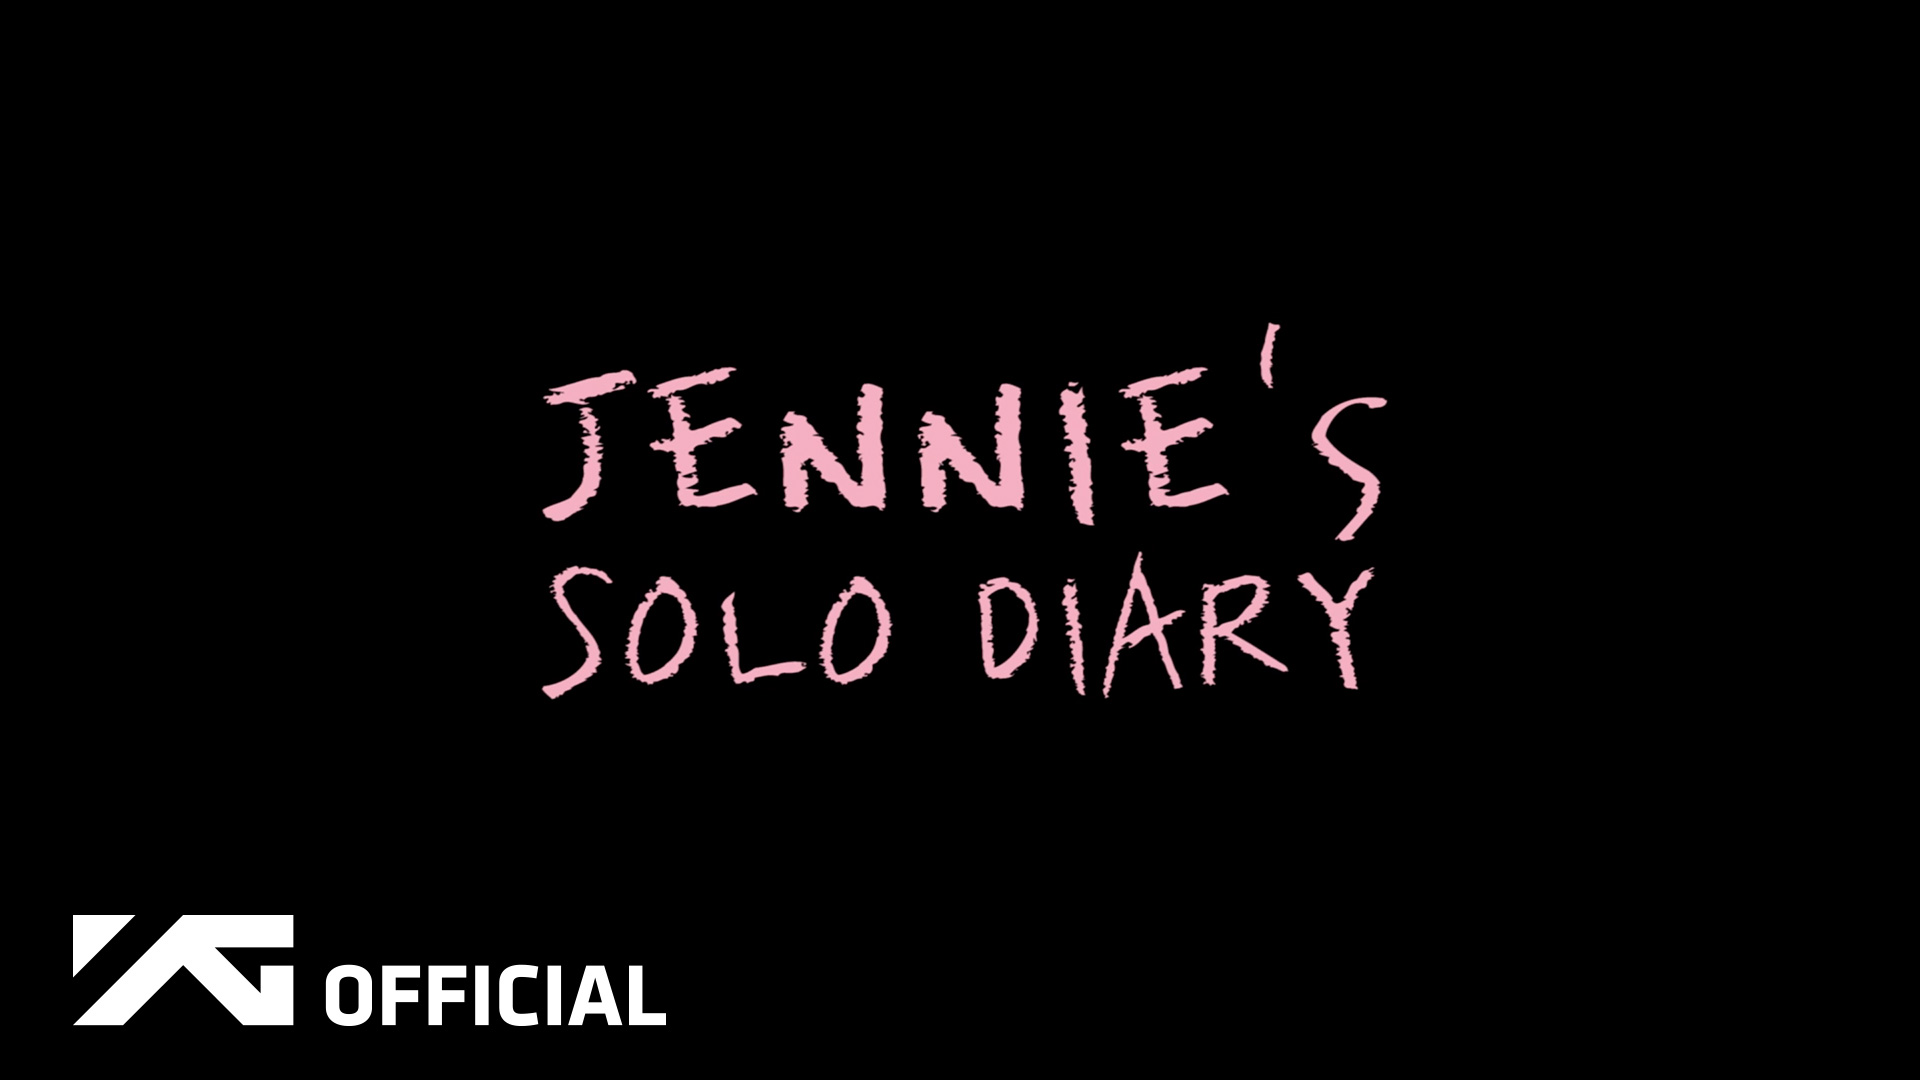 JENNIE - 'SOLO' DIARY EP.1